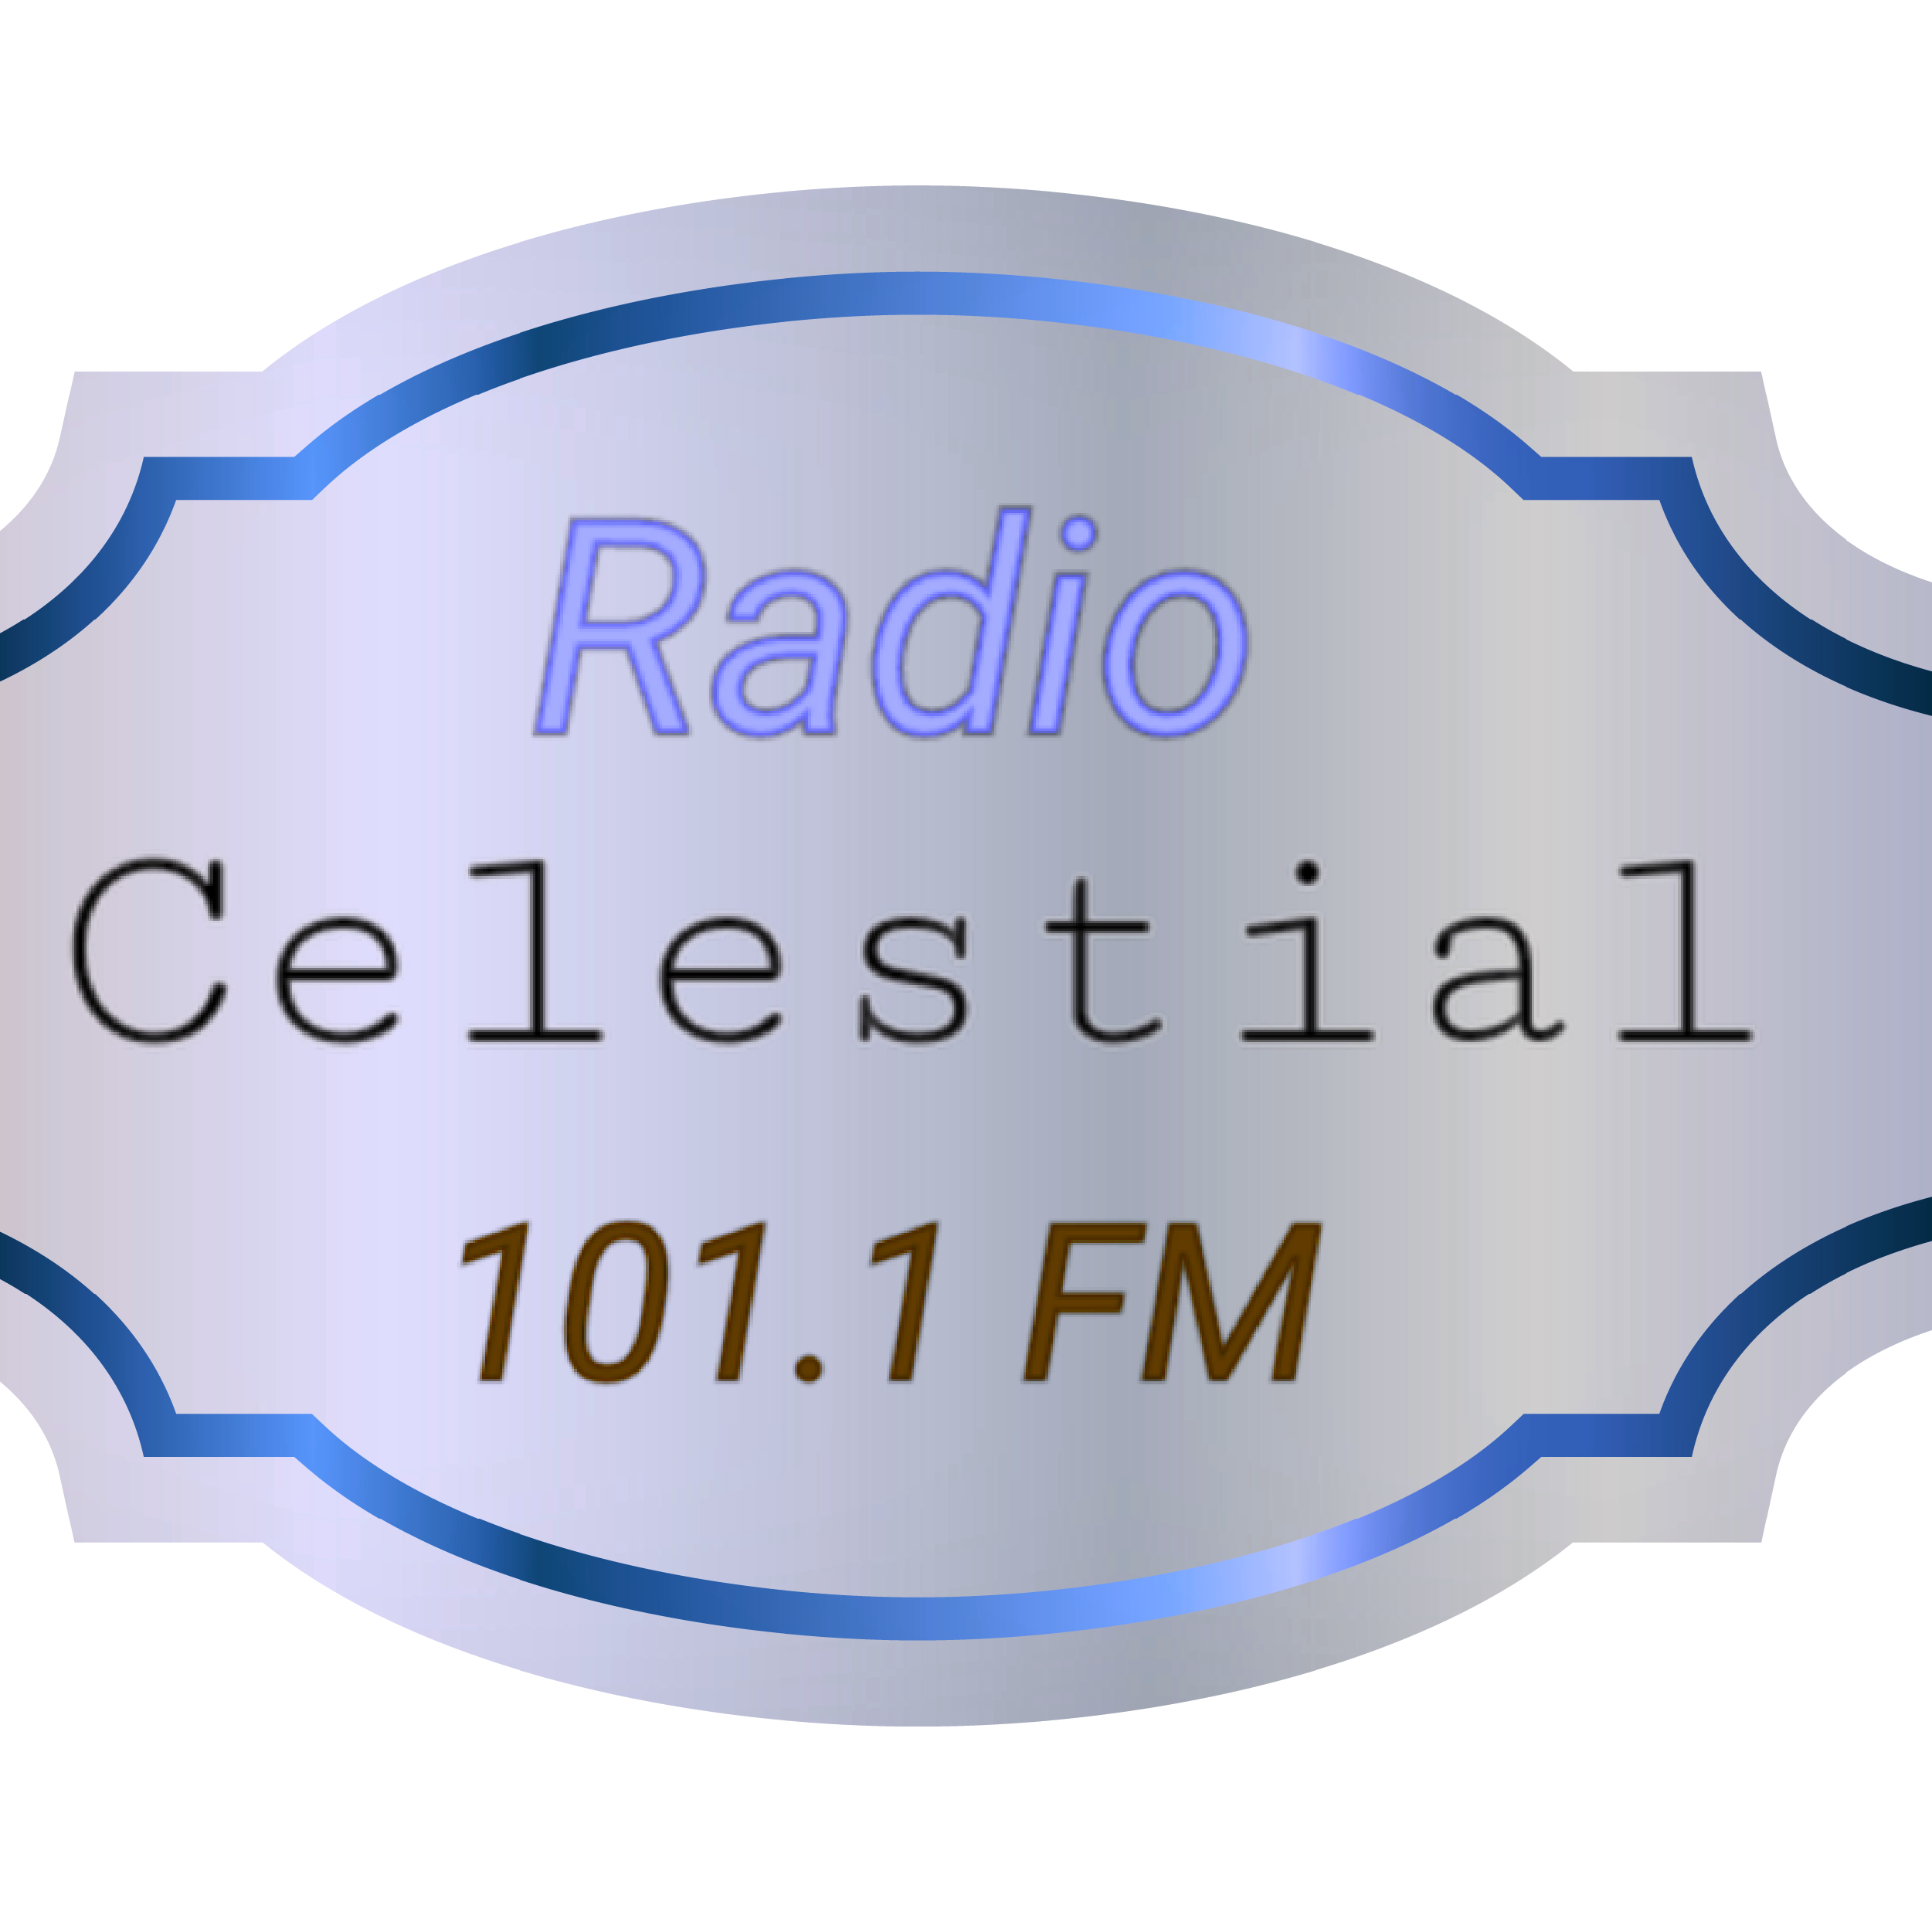 Radio celestial